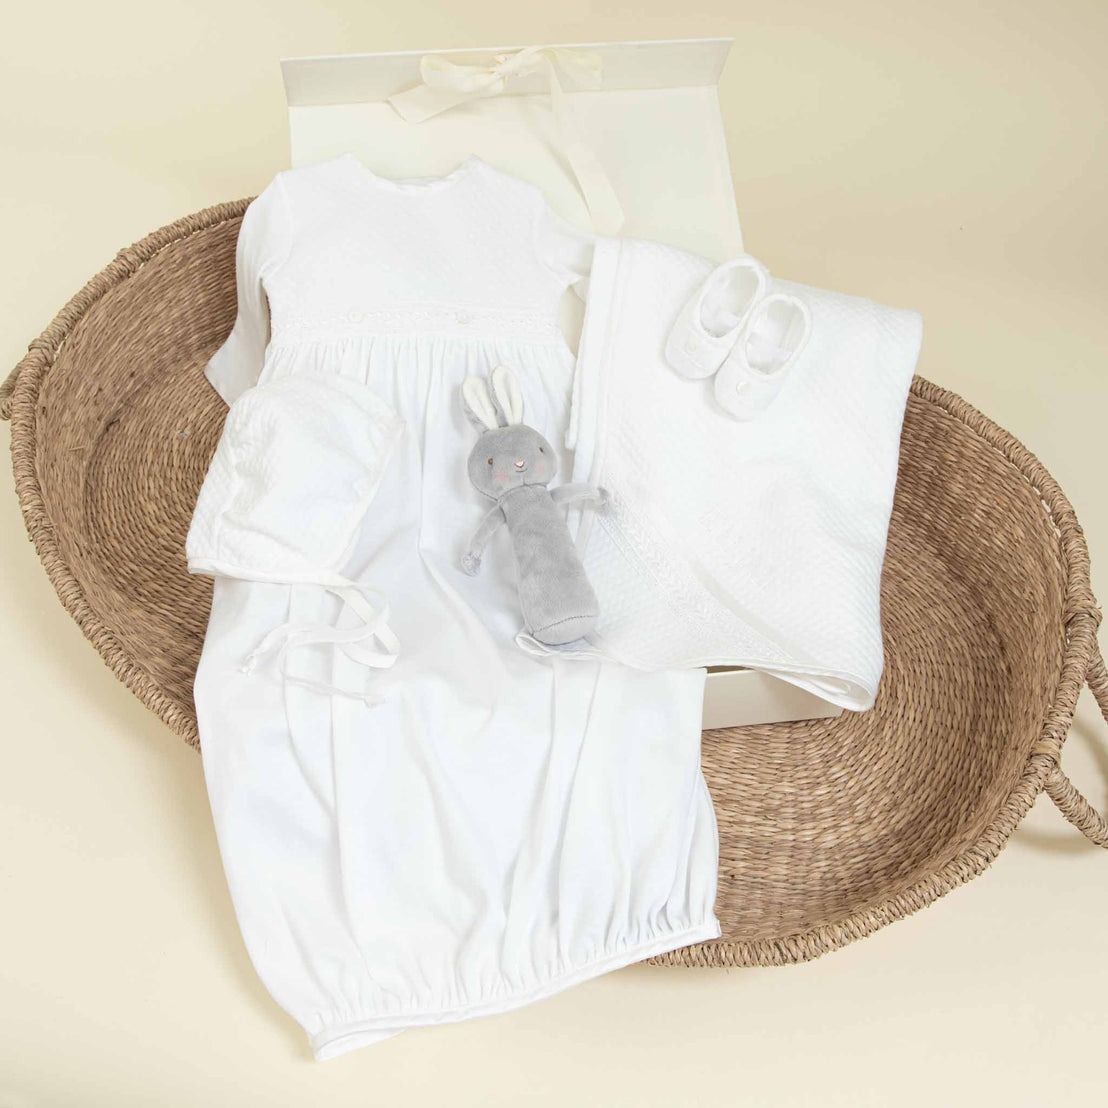 Elijah Newborn Gift Set - Save 10%